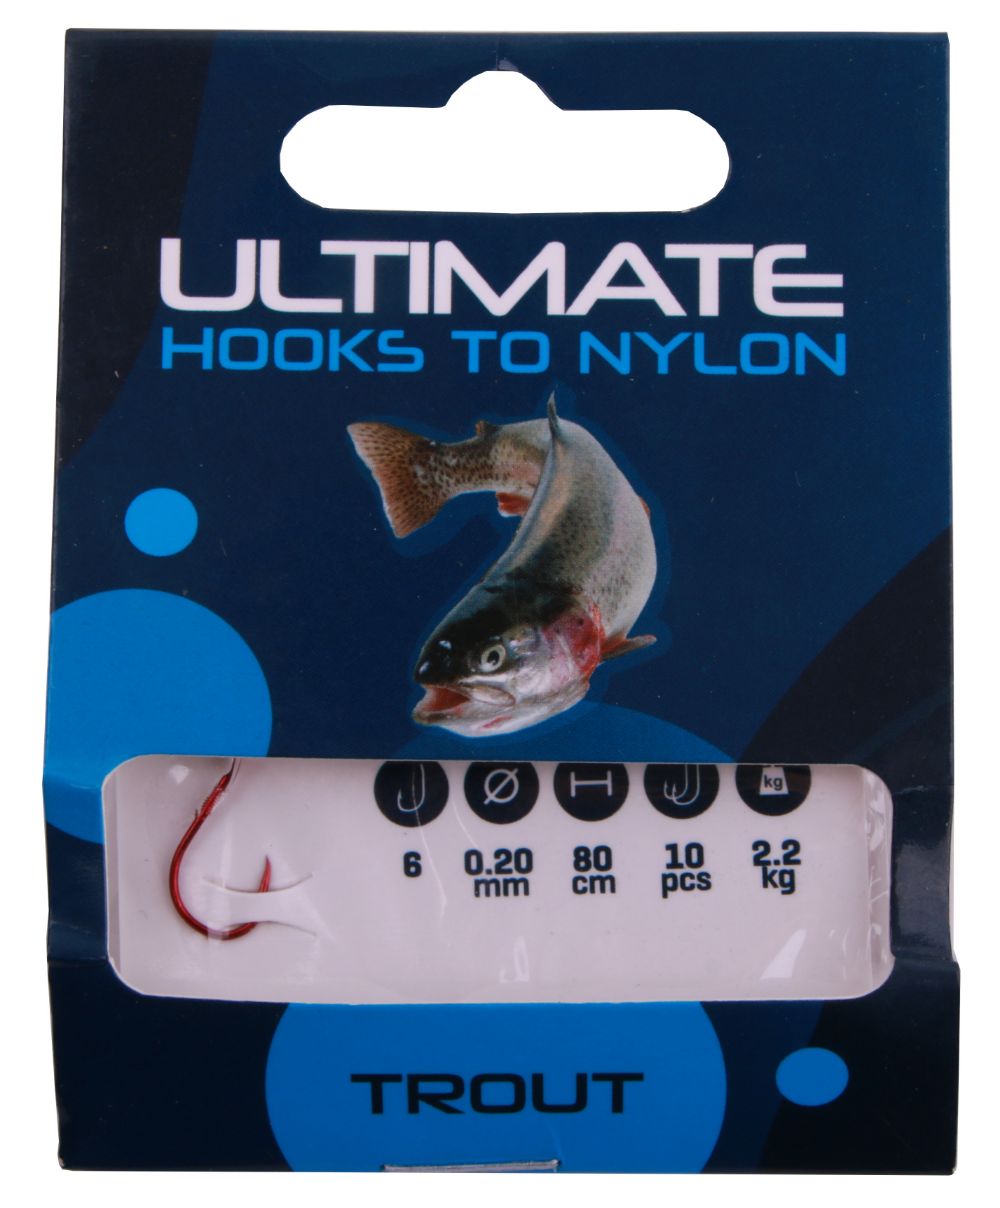 Ultimate hooks to nylon trout size 8 0,18mm 80cm 10pcs